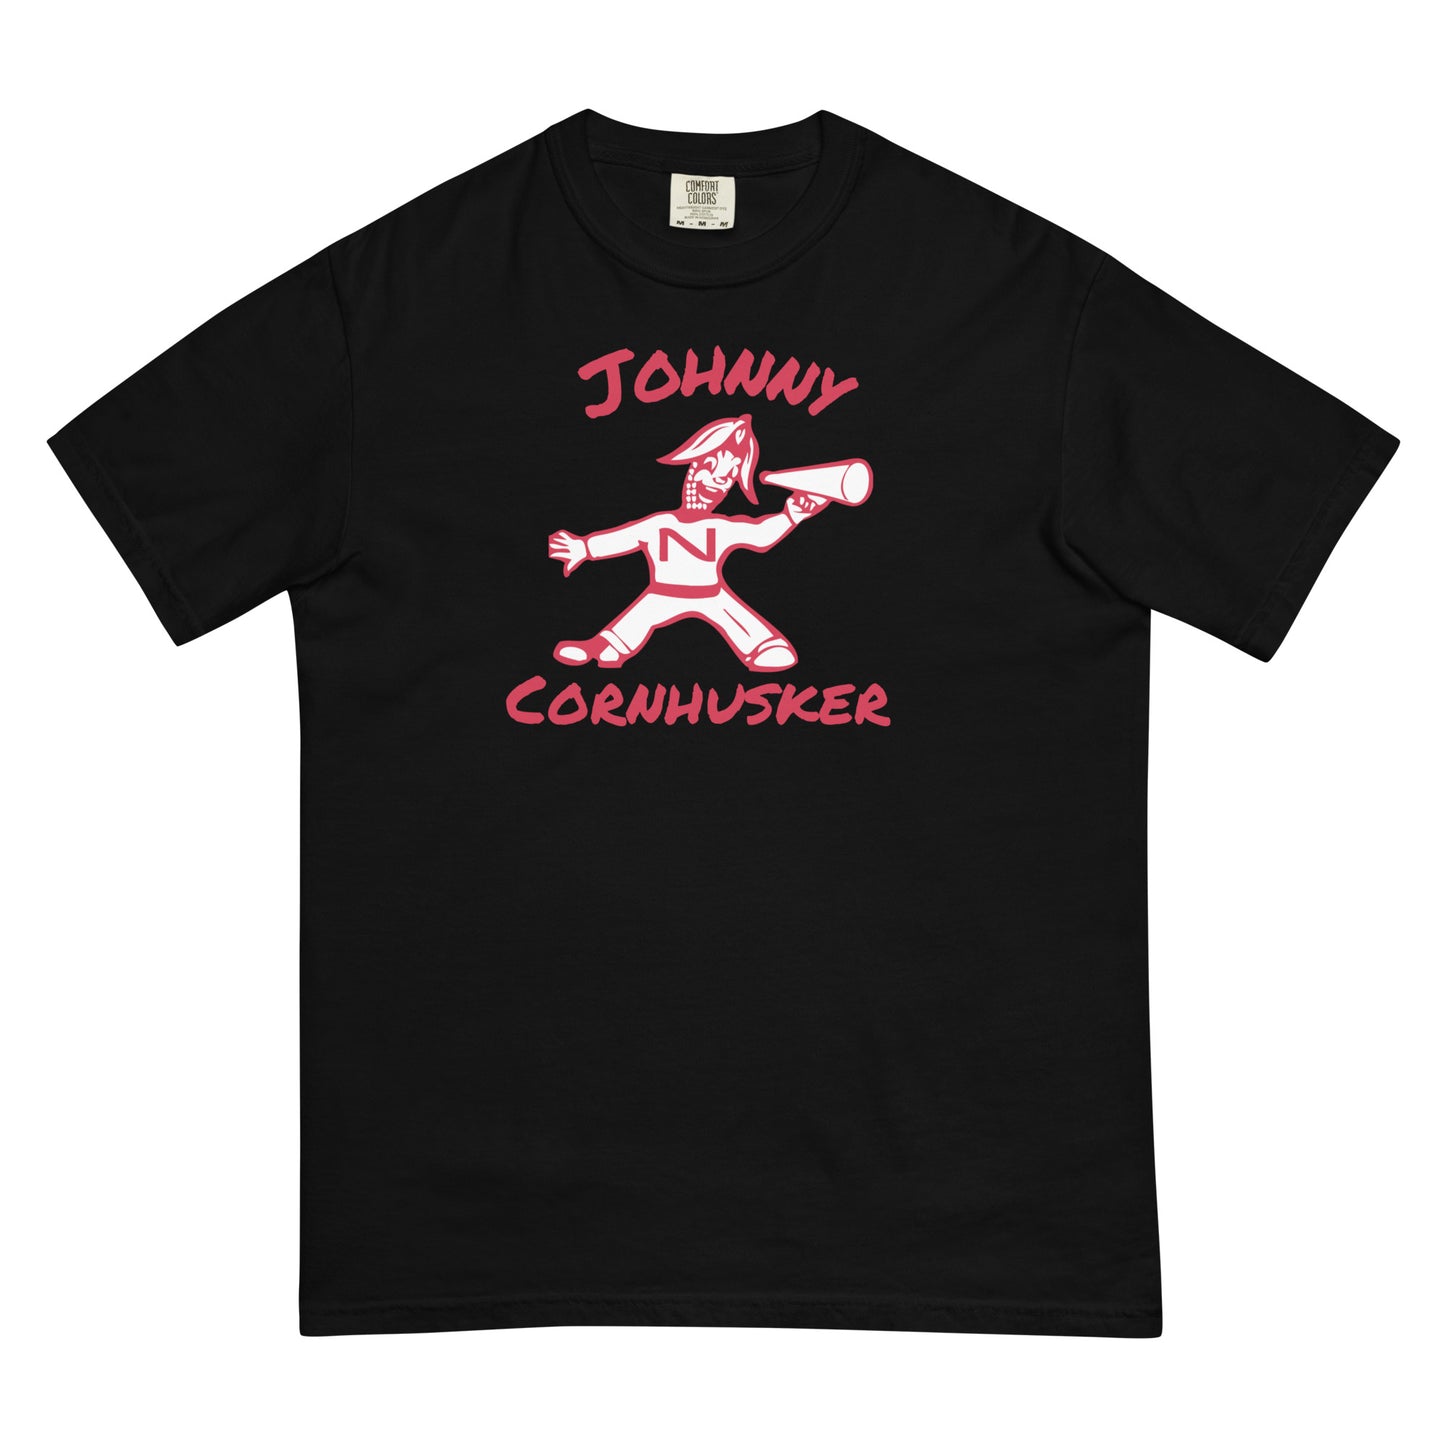 Johnny Cornhusker T-shirt